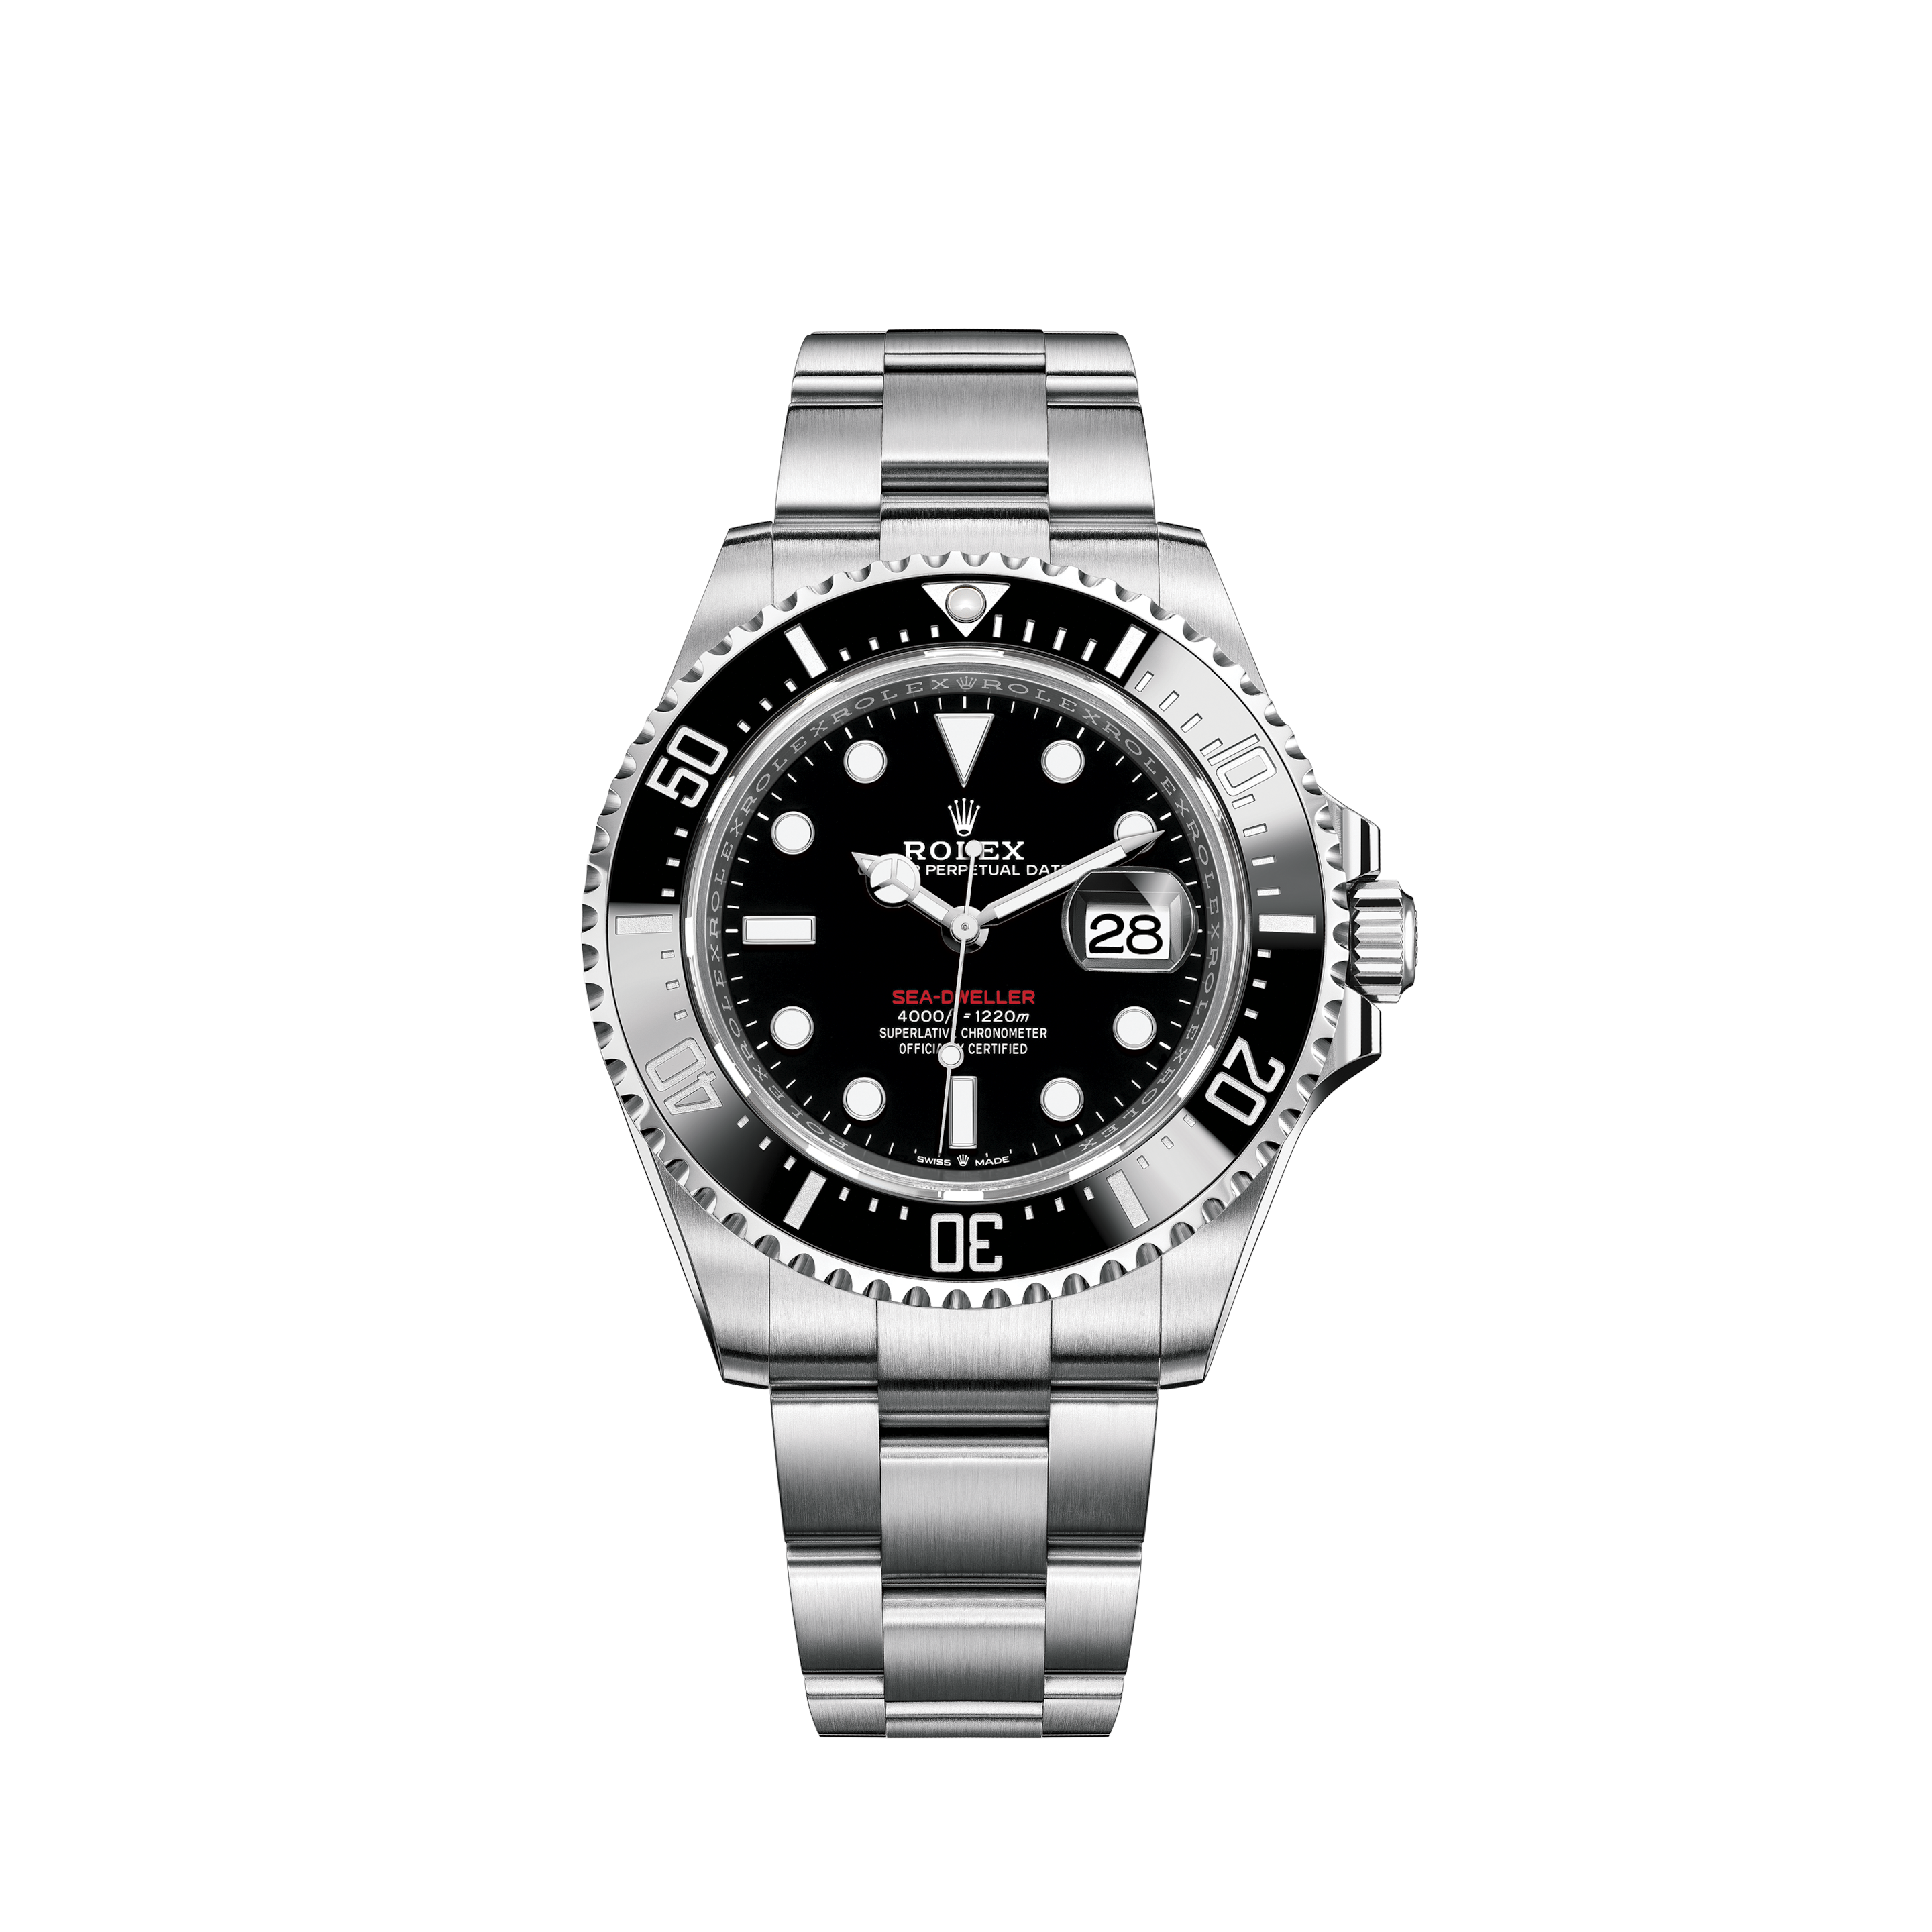 Rolex Sea-Dweller Deepsea 44 MM mint condition watch only